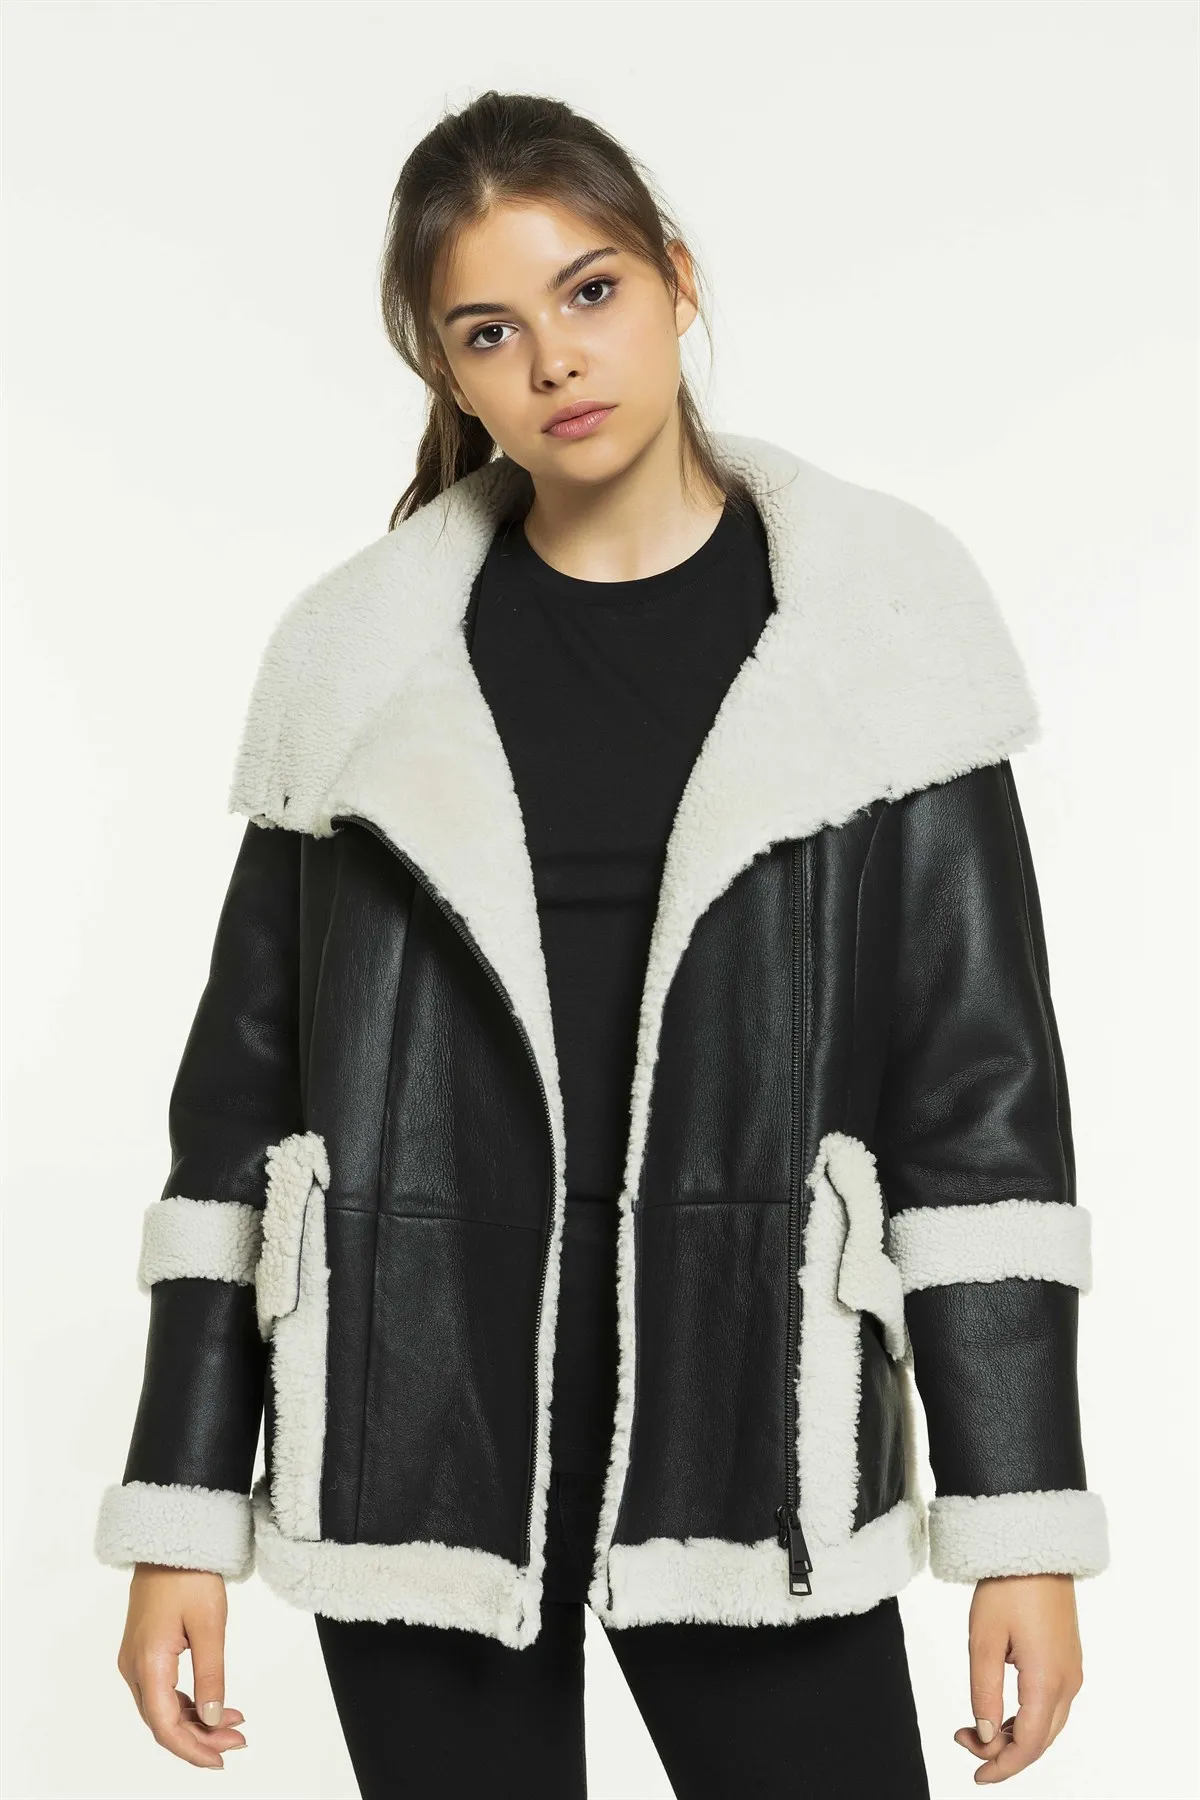 Women's Loose Dark Gray Shearling Leather Jacket Genuine Lambskin Winter Coats Keep Warm New Season Fashion Products Casual Wear